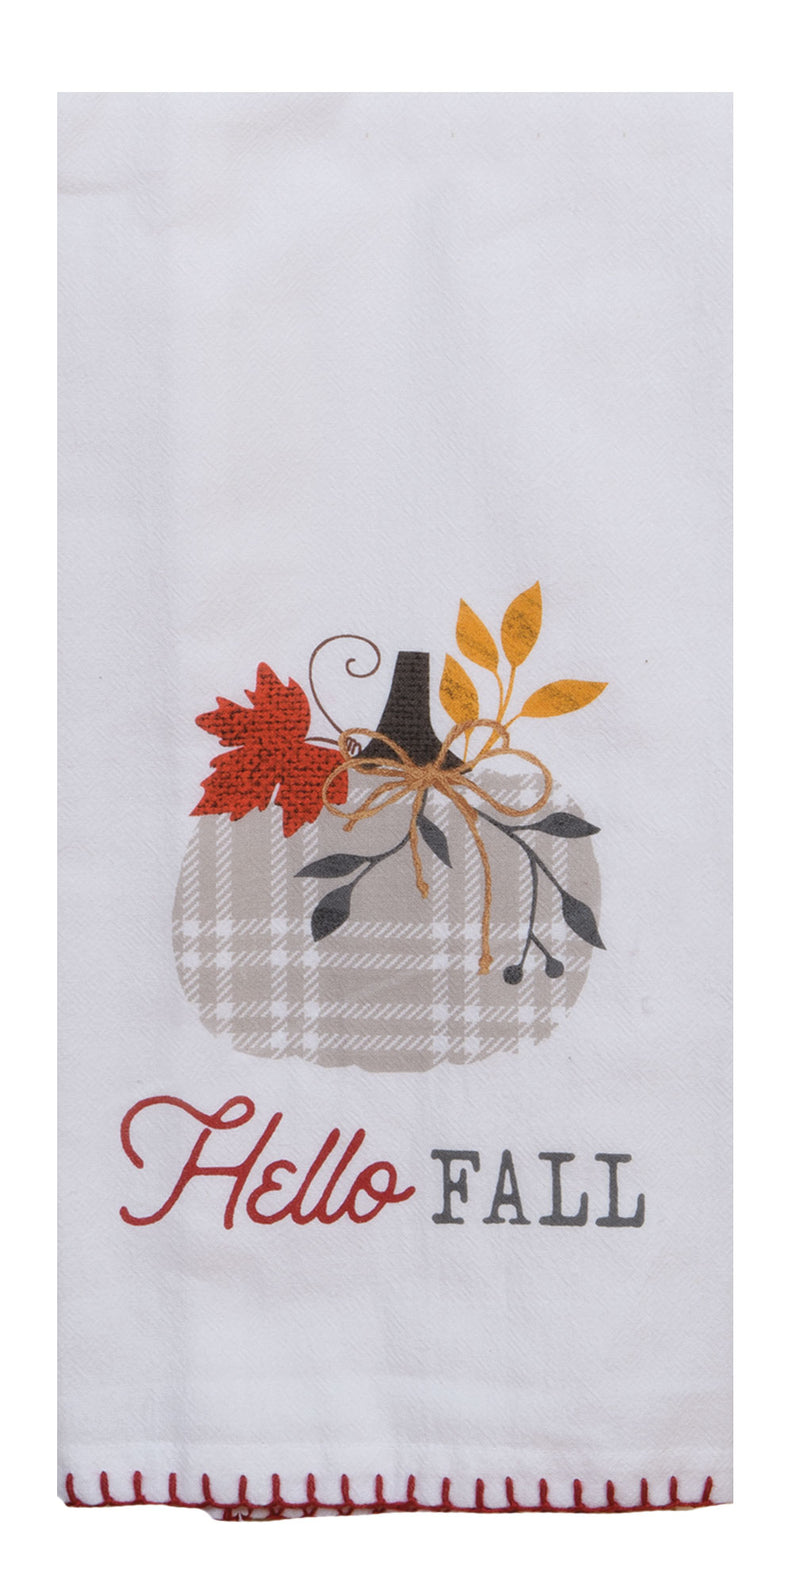 Harvest Blessings Hello Fall Flour Sack Towel - The Country Christmas Loft